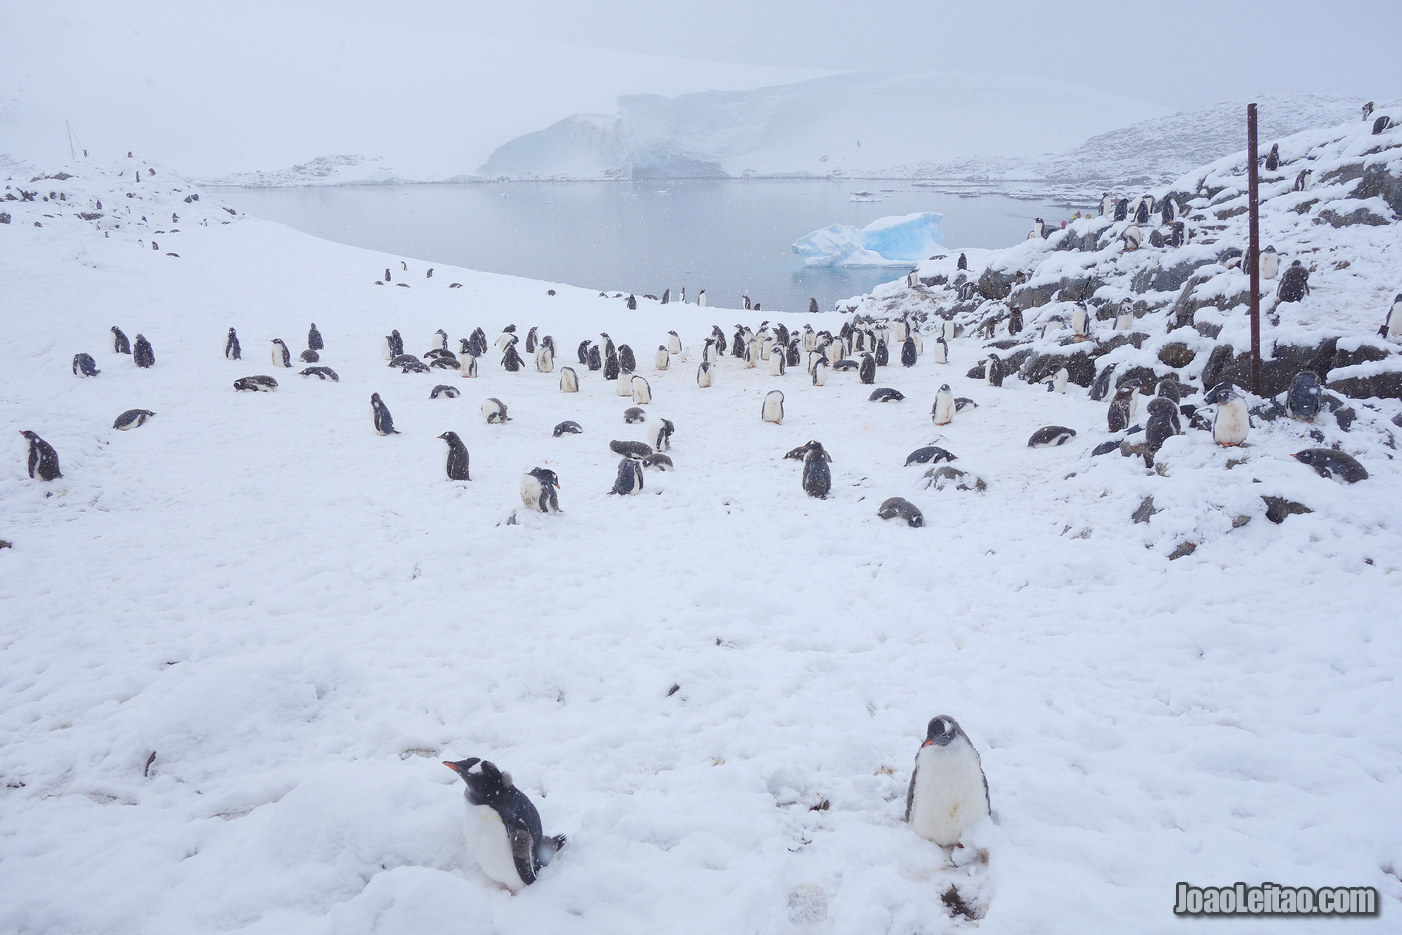 Visit Goudier Island in Antarctica